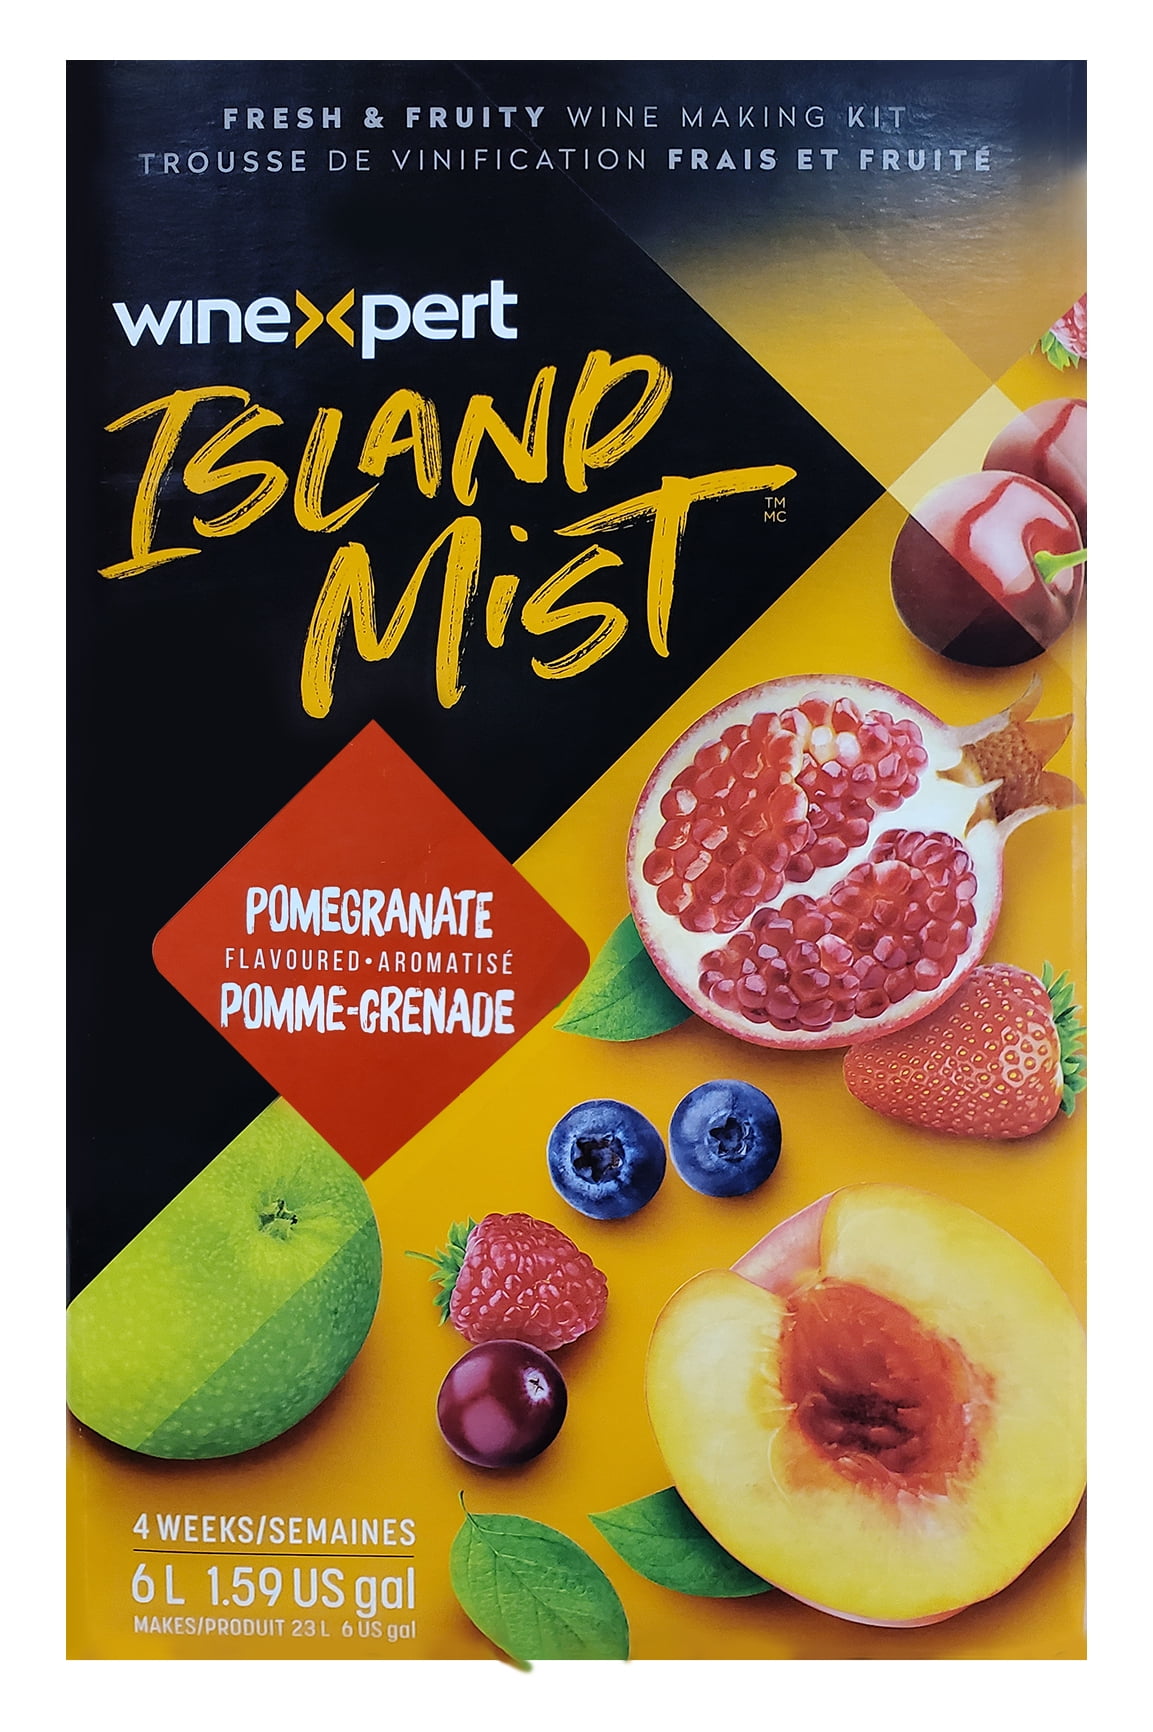 Pomegranate Zinfandel (Island Mist)